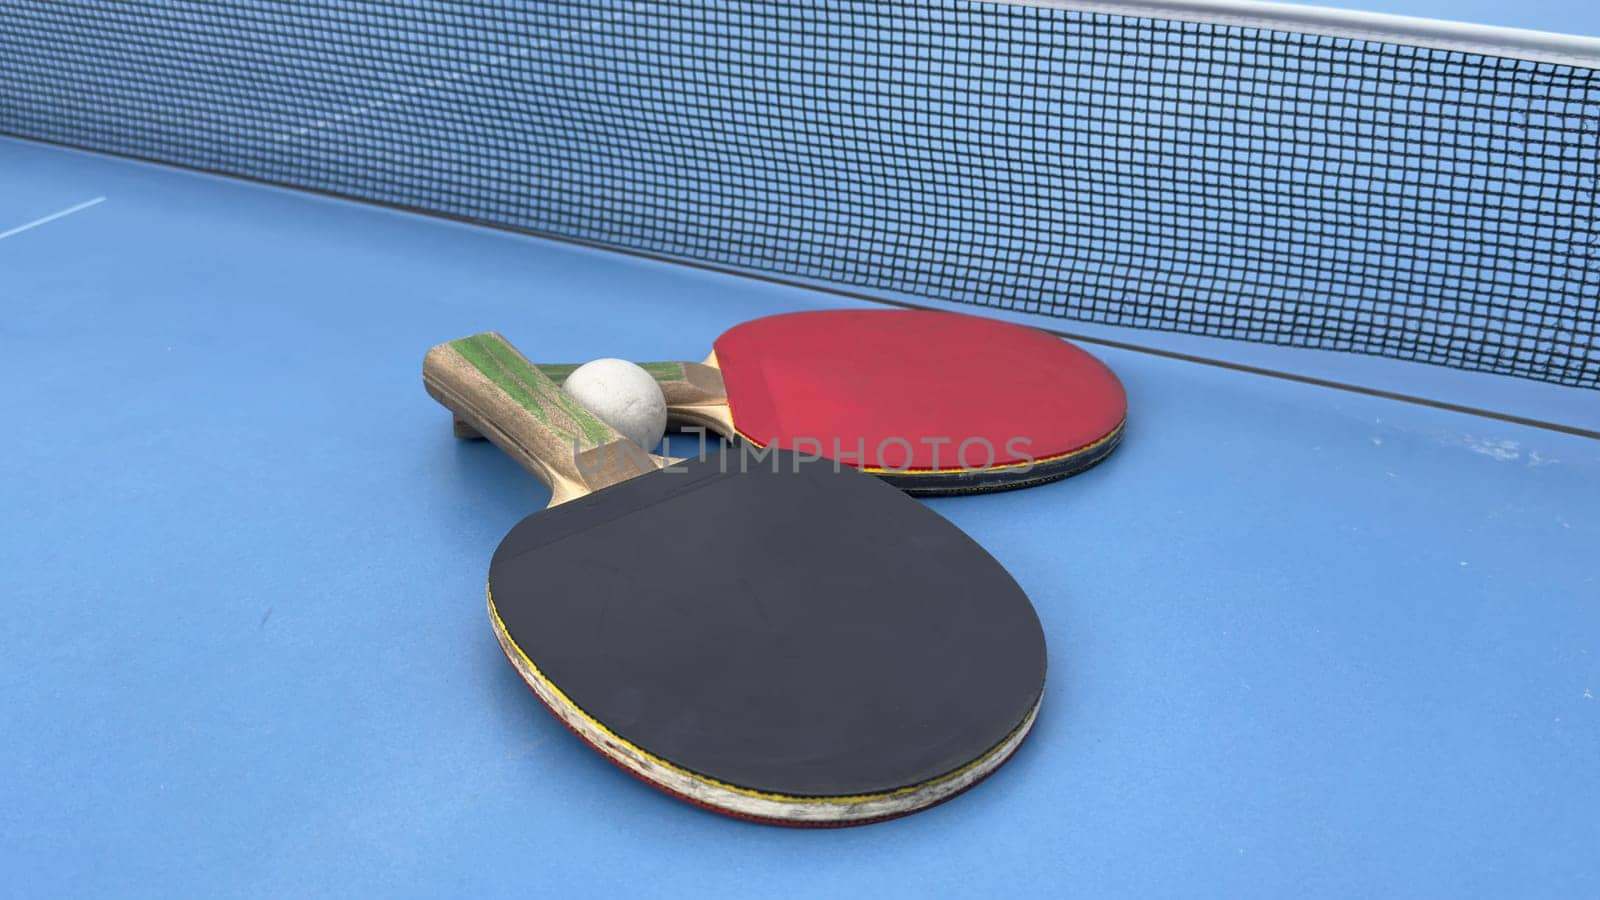 Minimal photos of table tennis . High quality photo